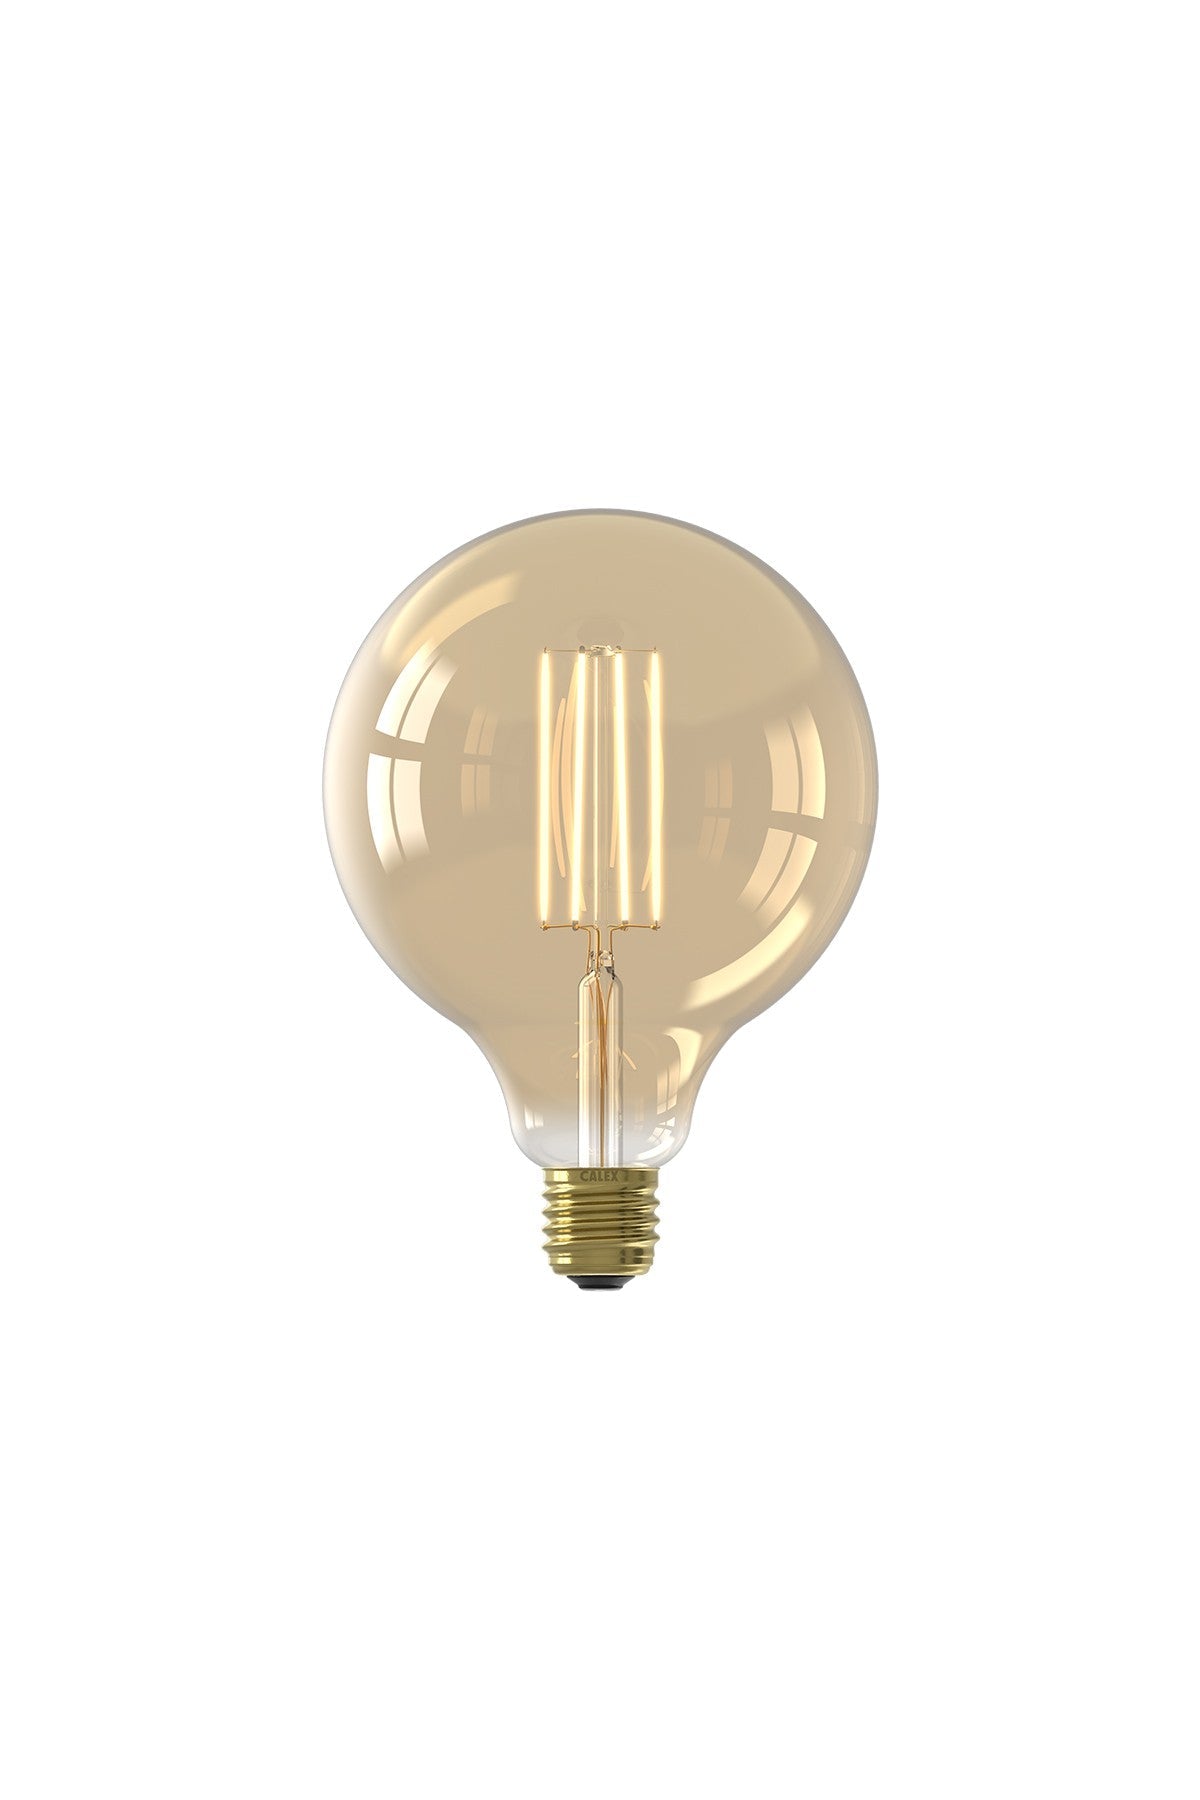 Filament LED Dimbare Globe Lamp 220-240V 6W E27 - Calex